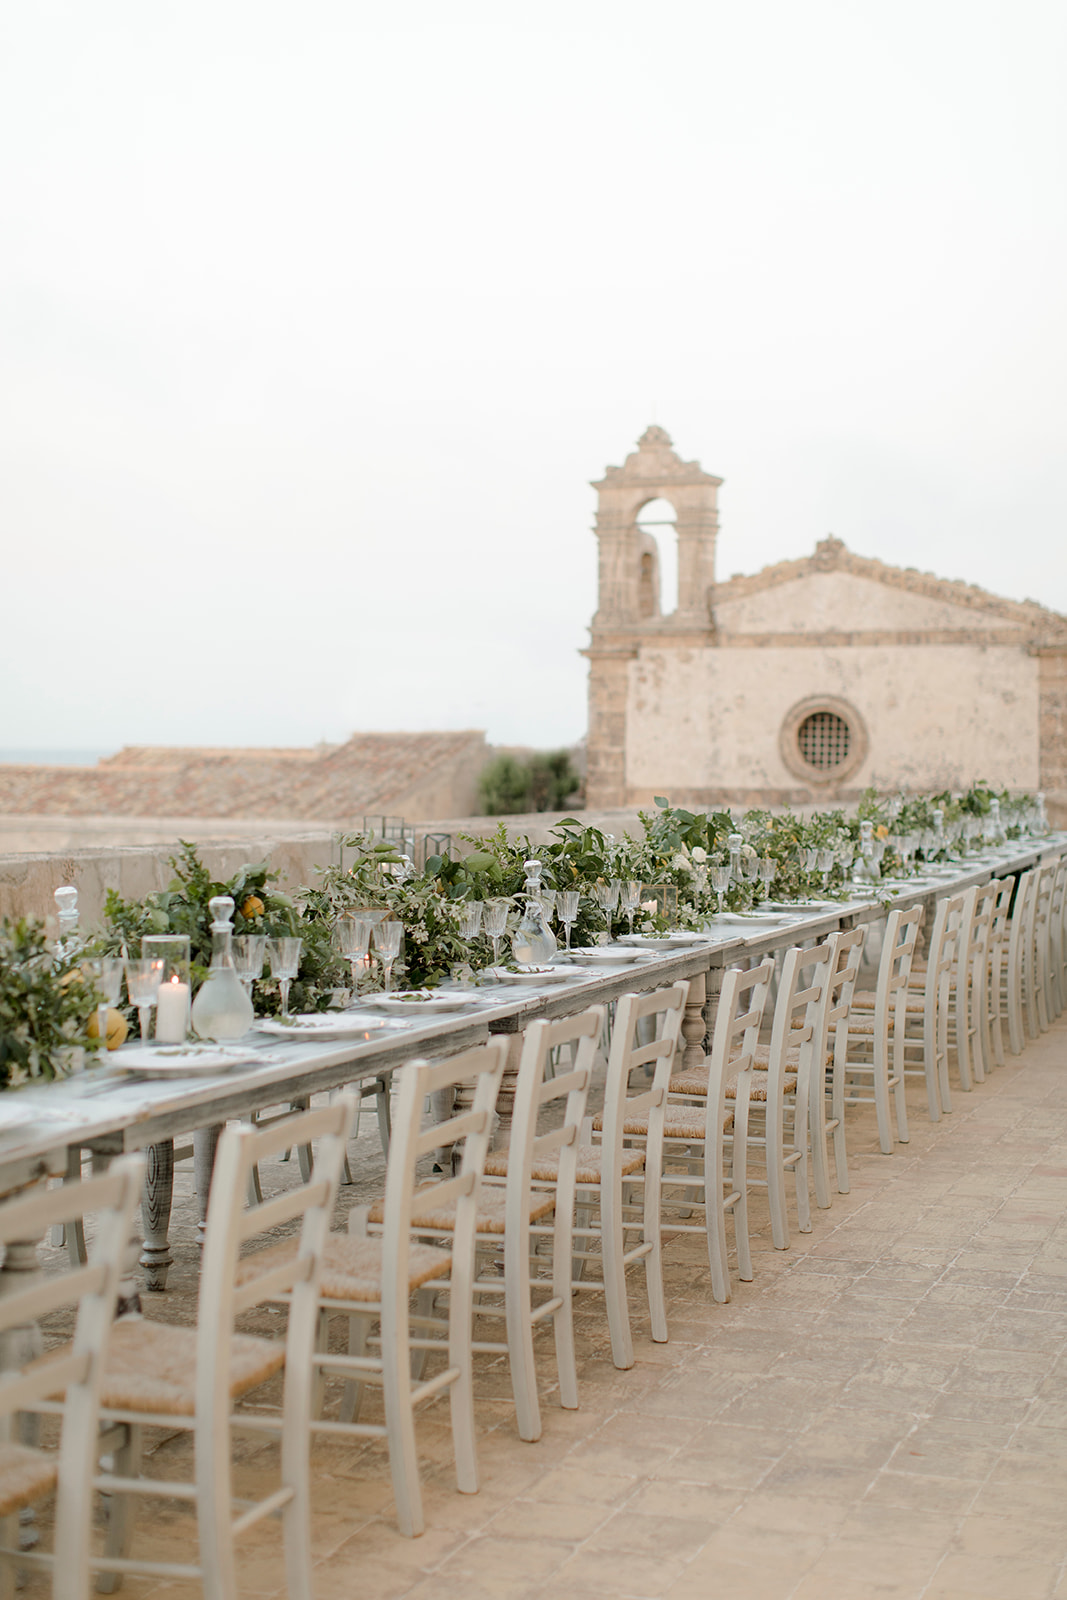 Wedding dinner at Tonnara Marzamemi, Sicily // Photo Credit Monika Leggio Wedding Photography